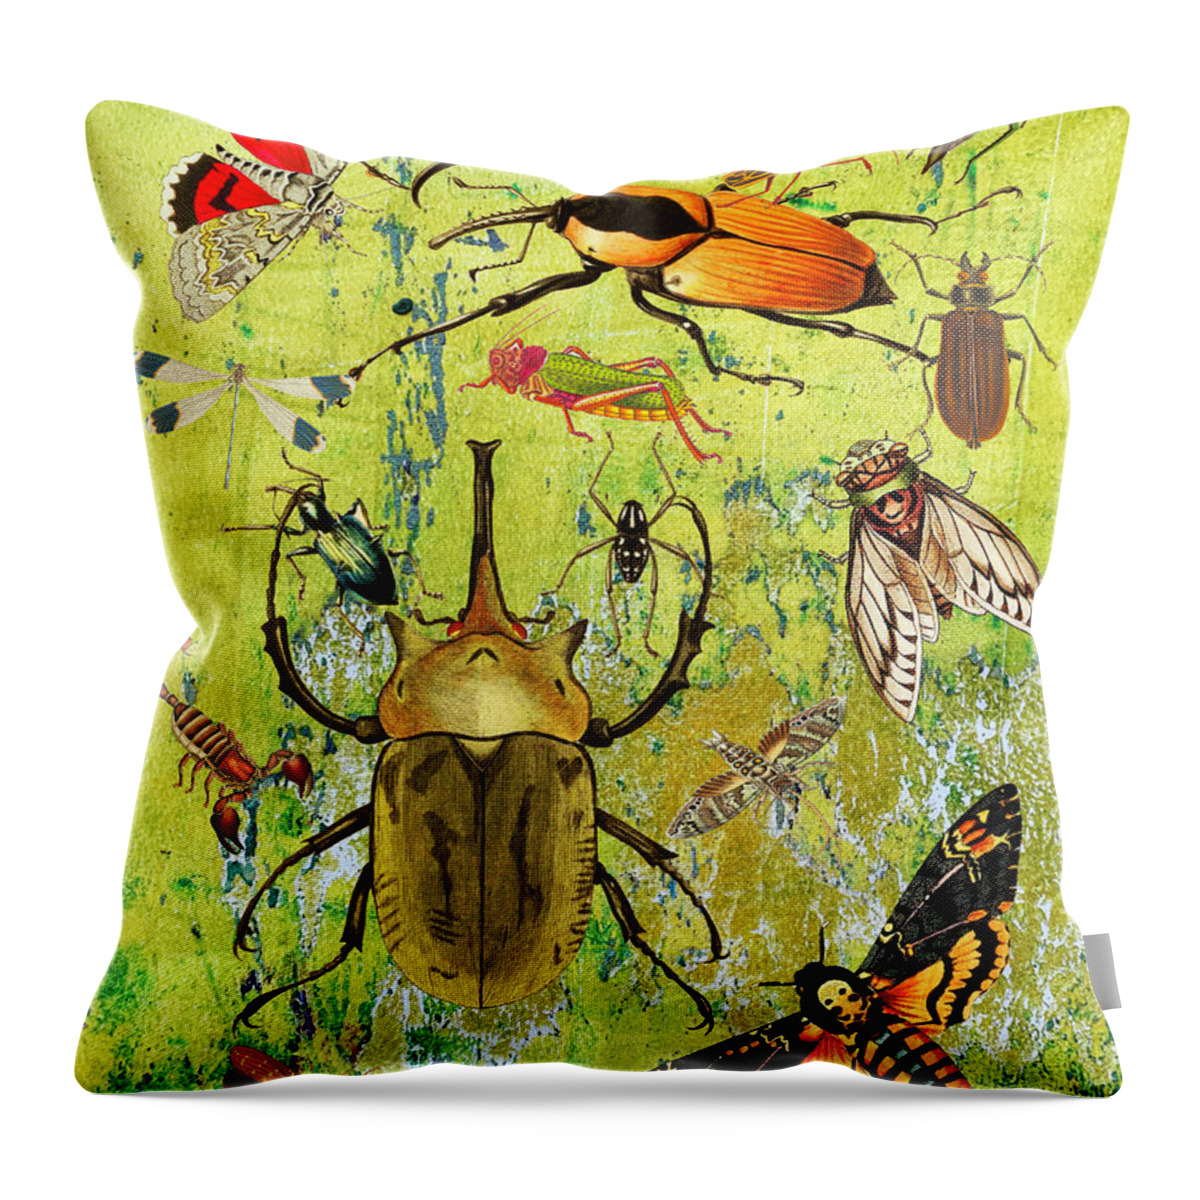 Beetles Throw Pillow featuring the mixed media Bug Fiesta by Lorena Cassady